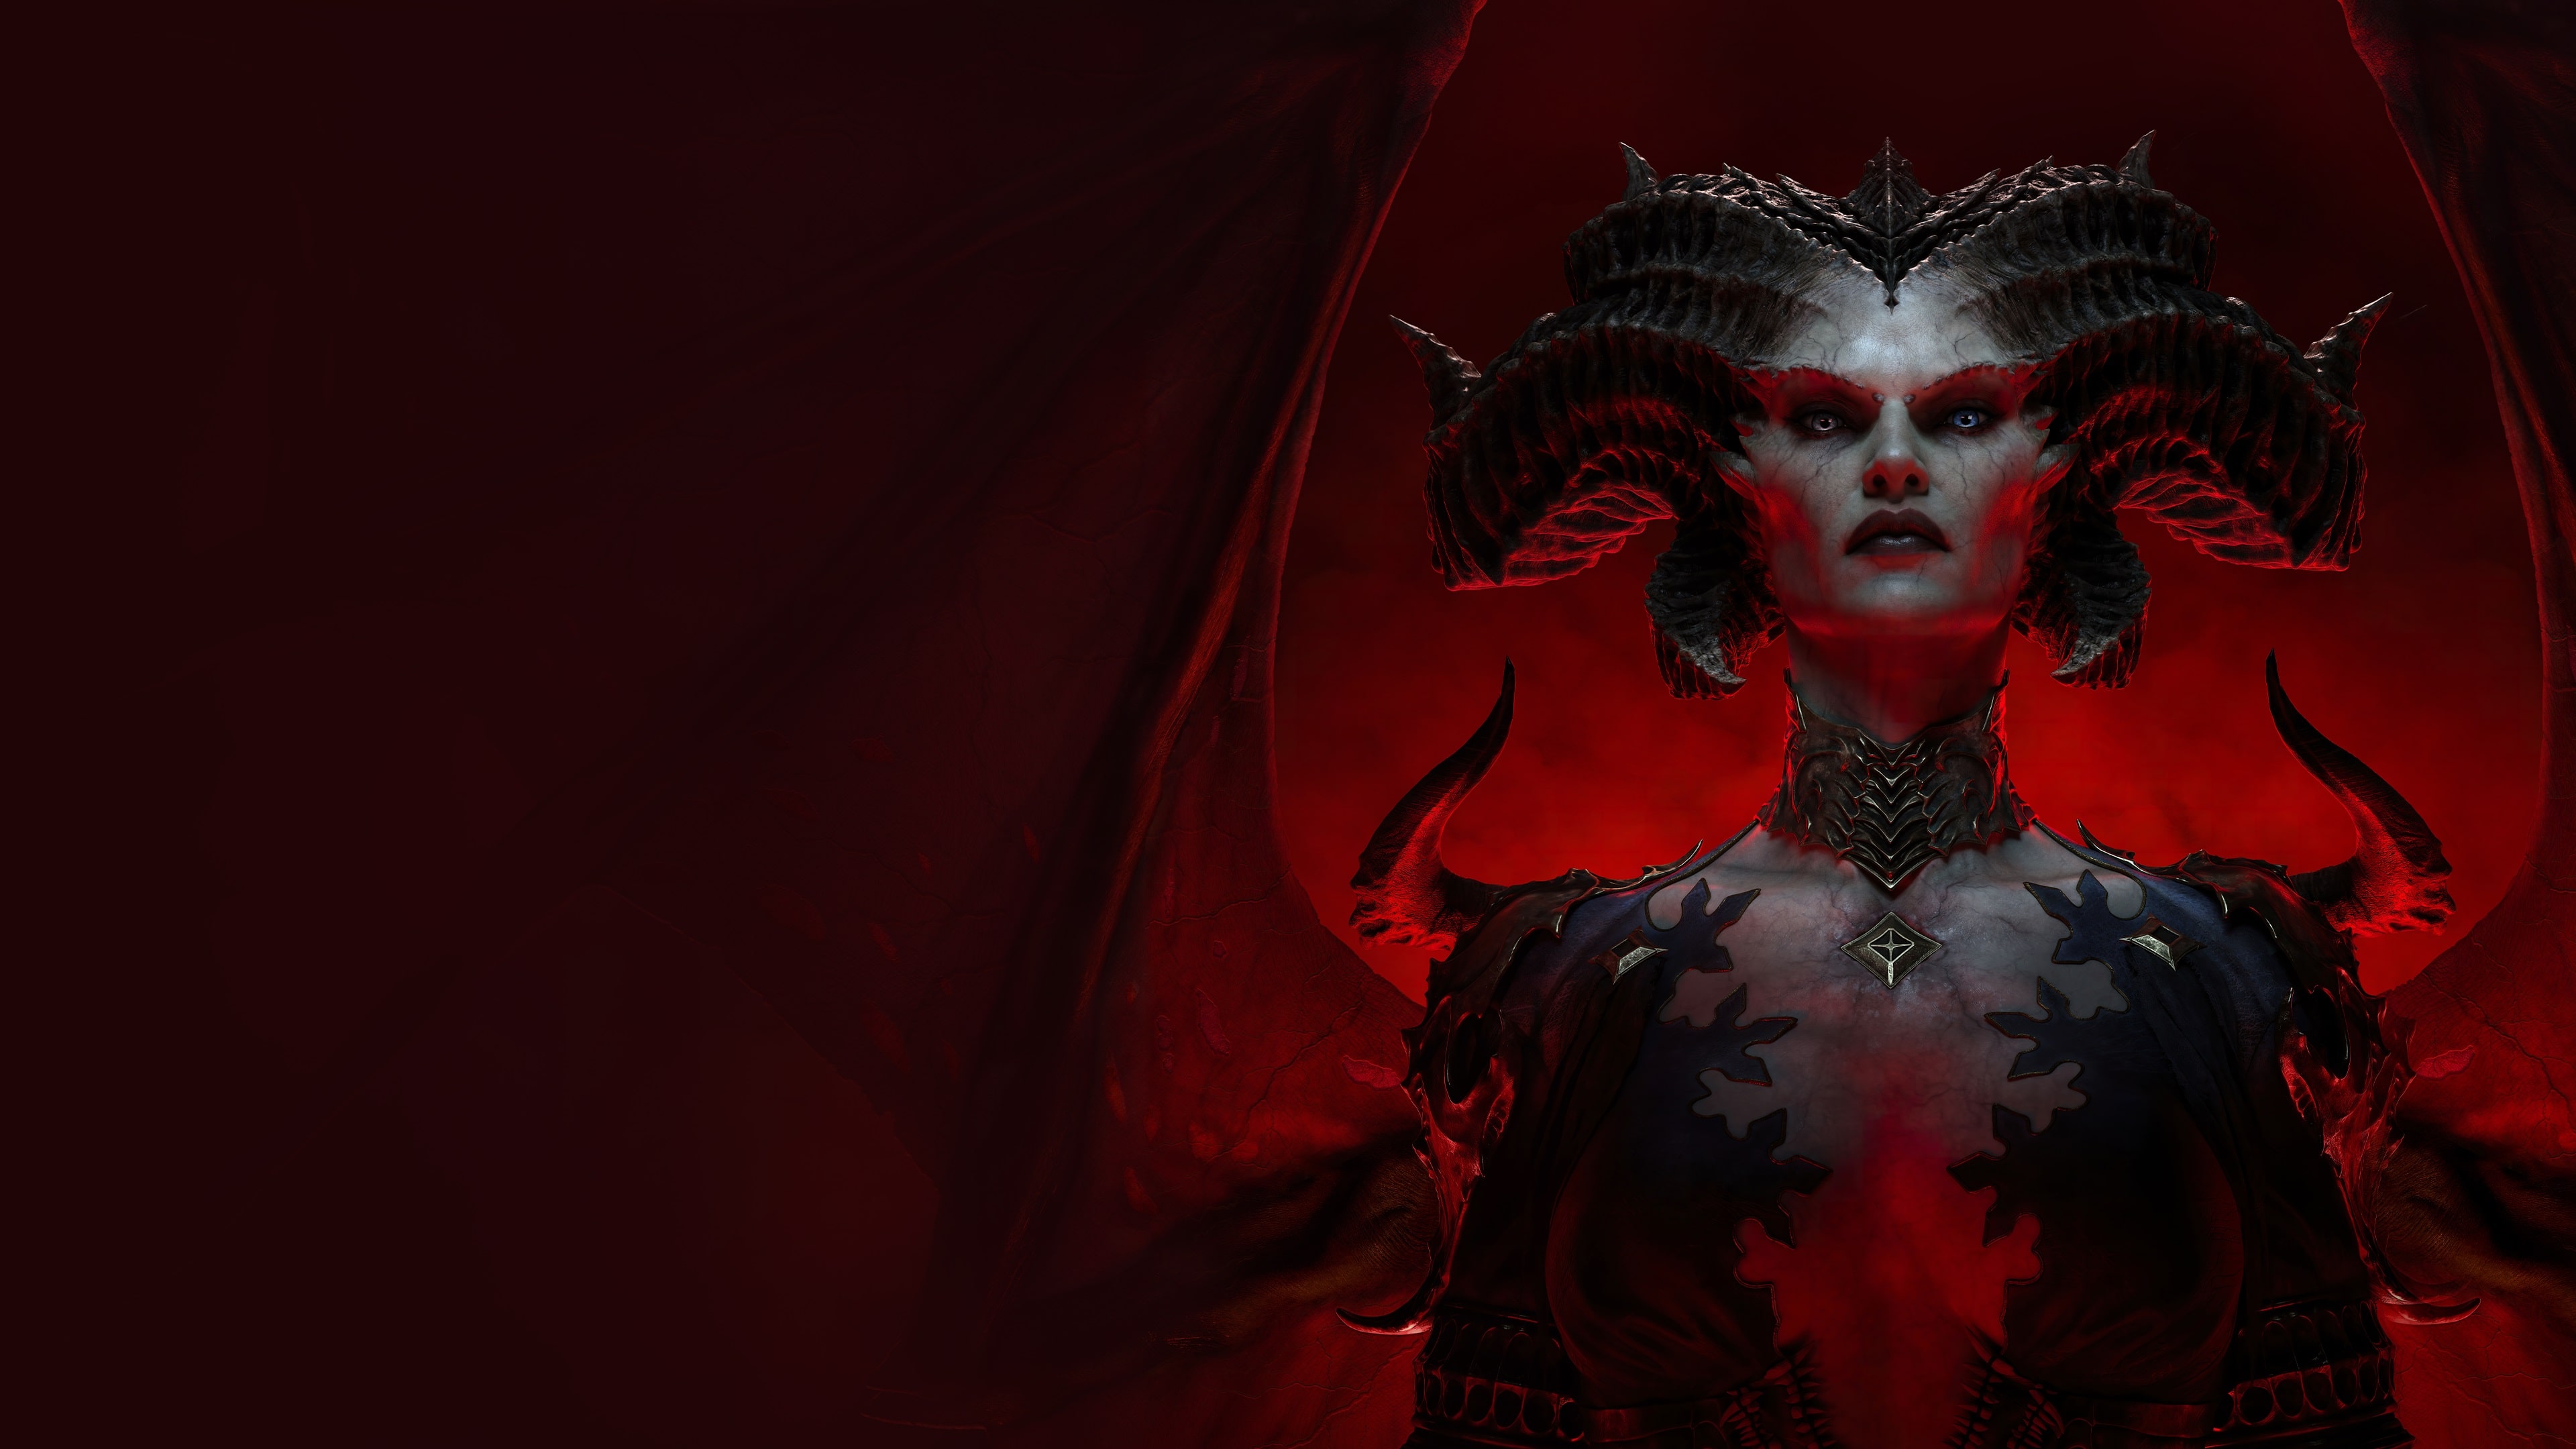 Diablo® IV - Standard Edition (Game)